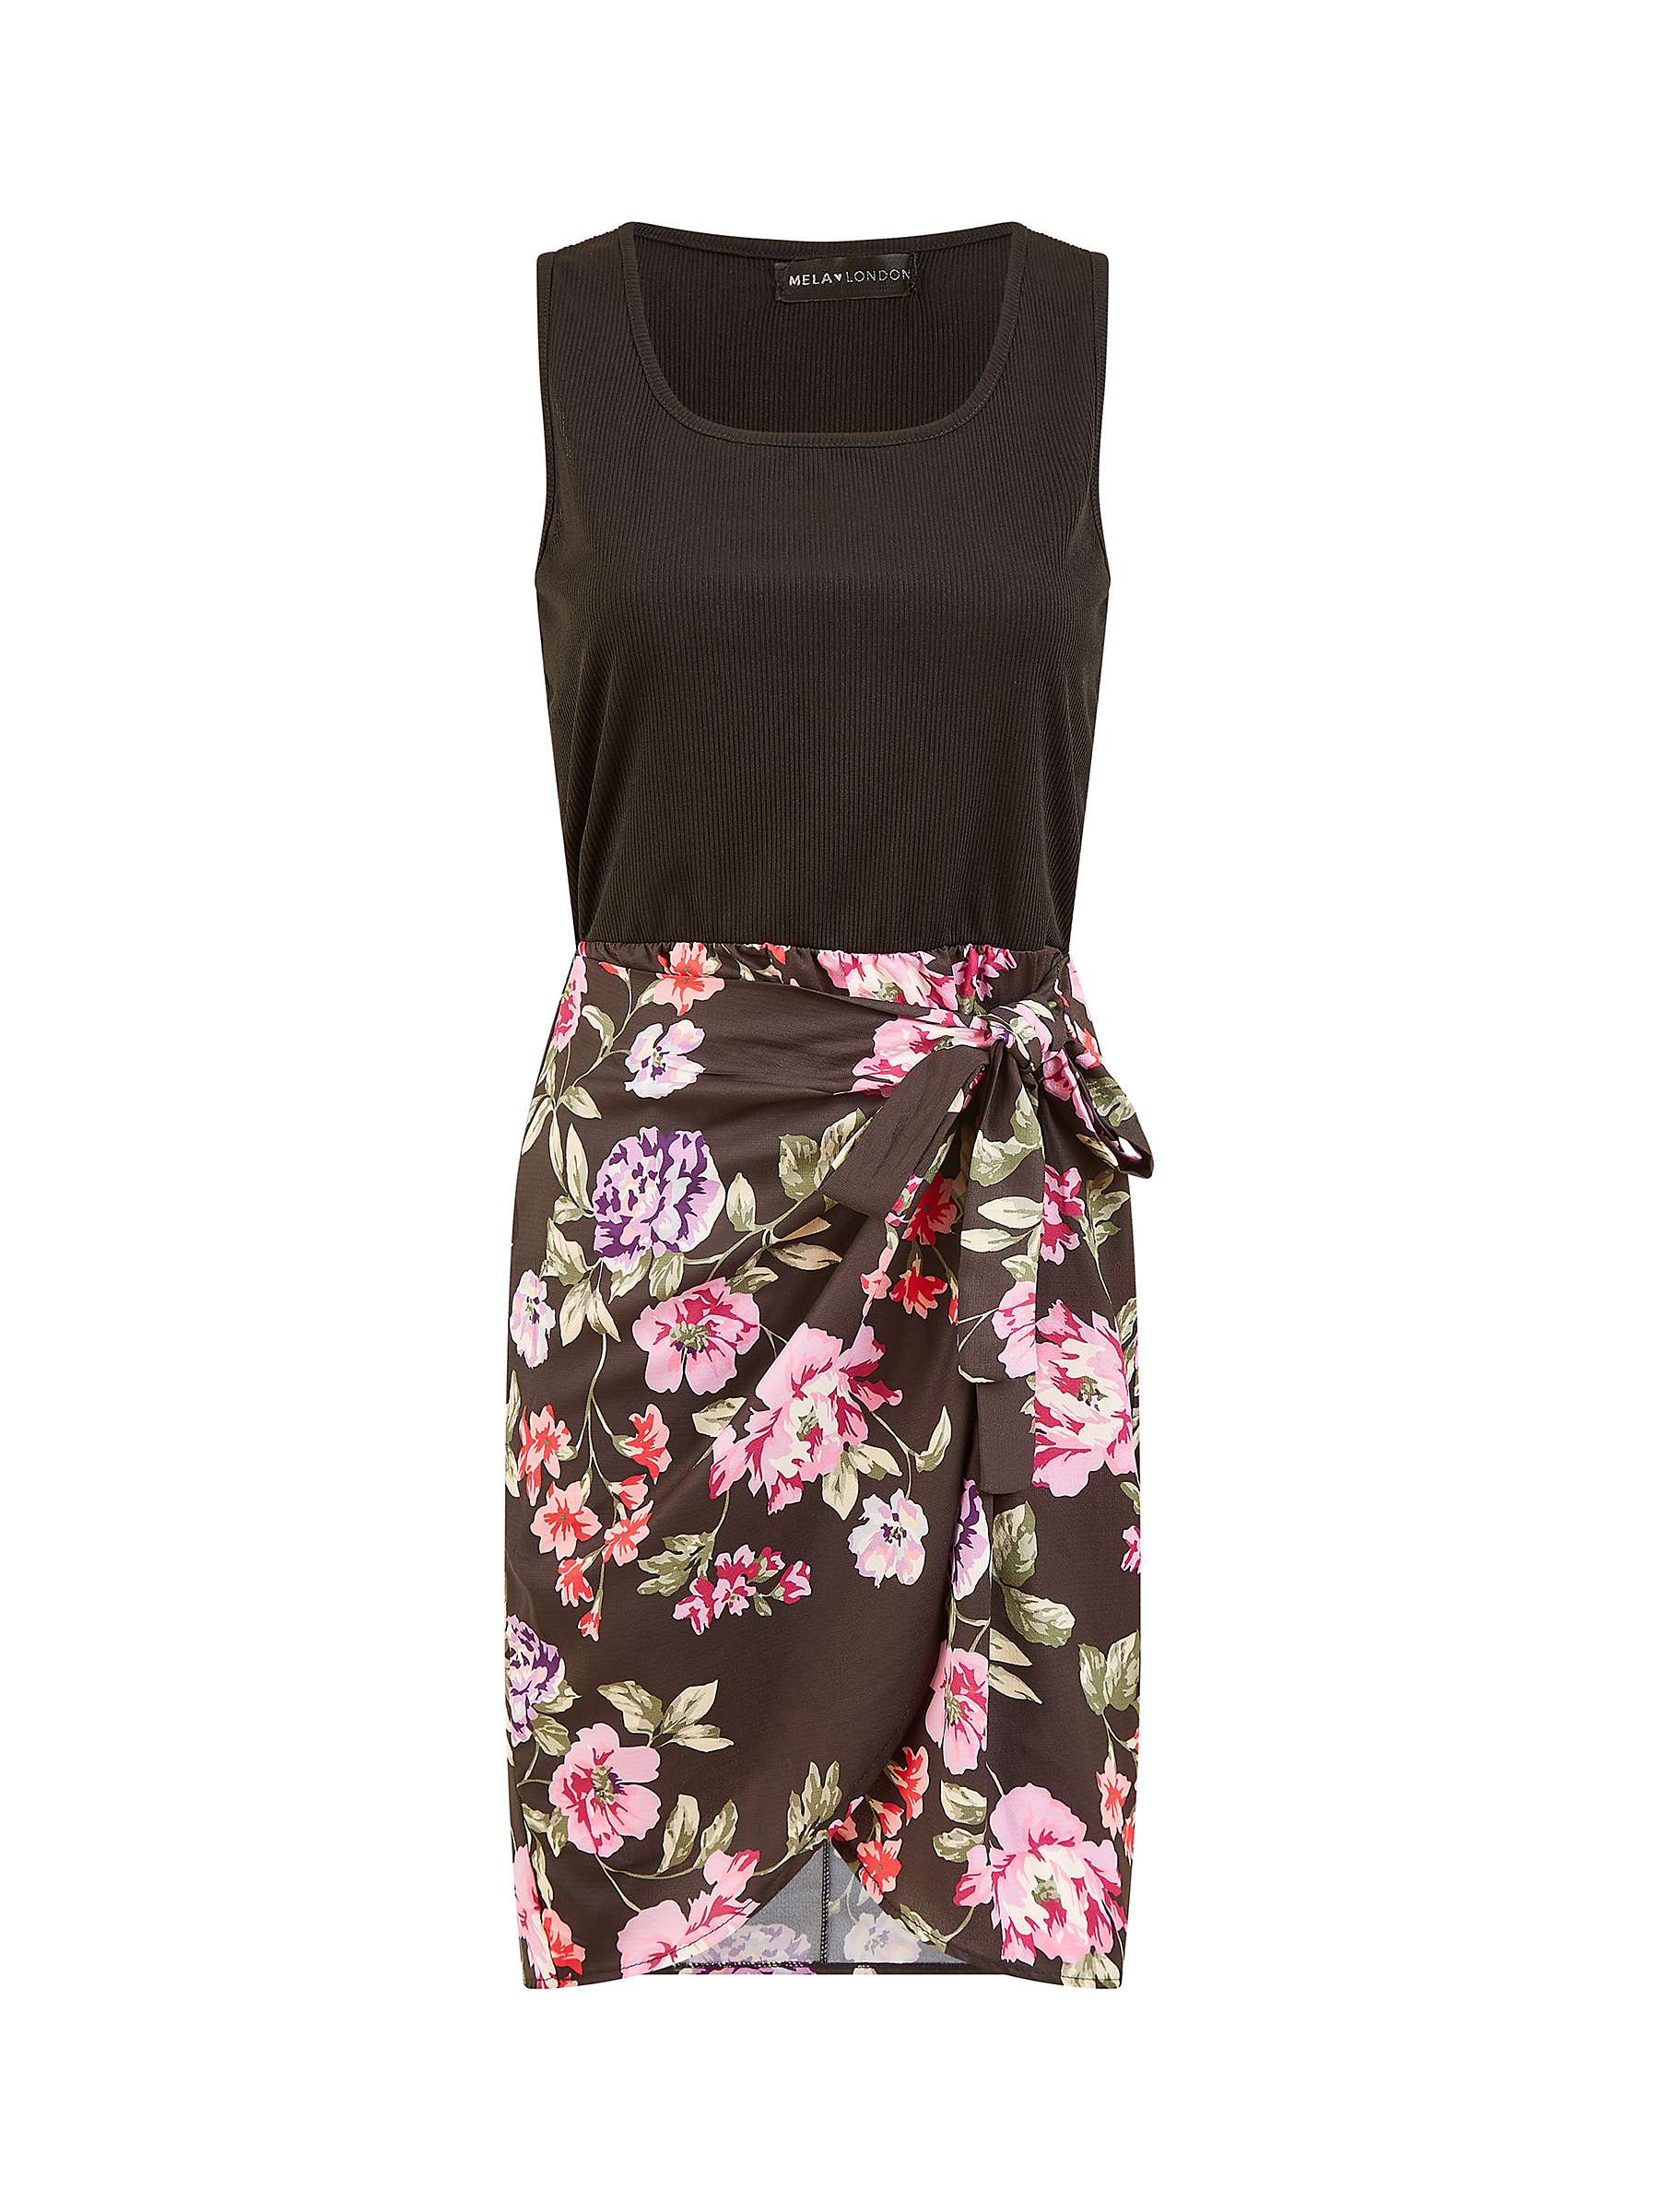 Buy Mela London Floral Print Wrap Mini Dress, Black/Multi Online at johnlewis.com